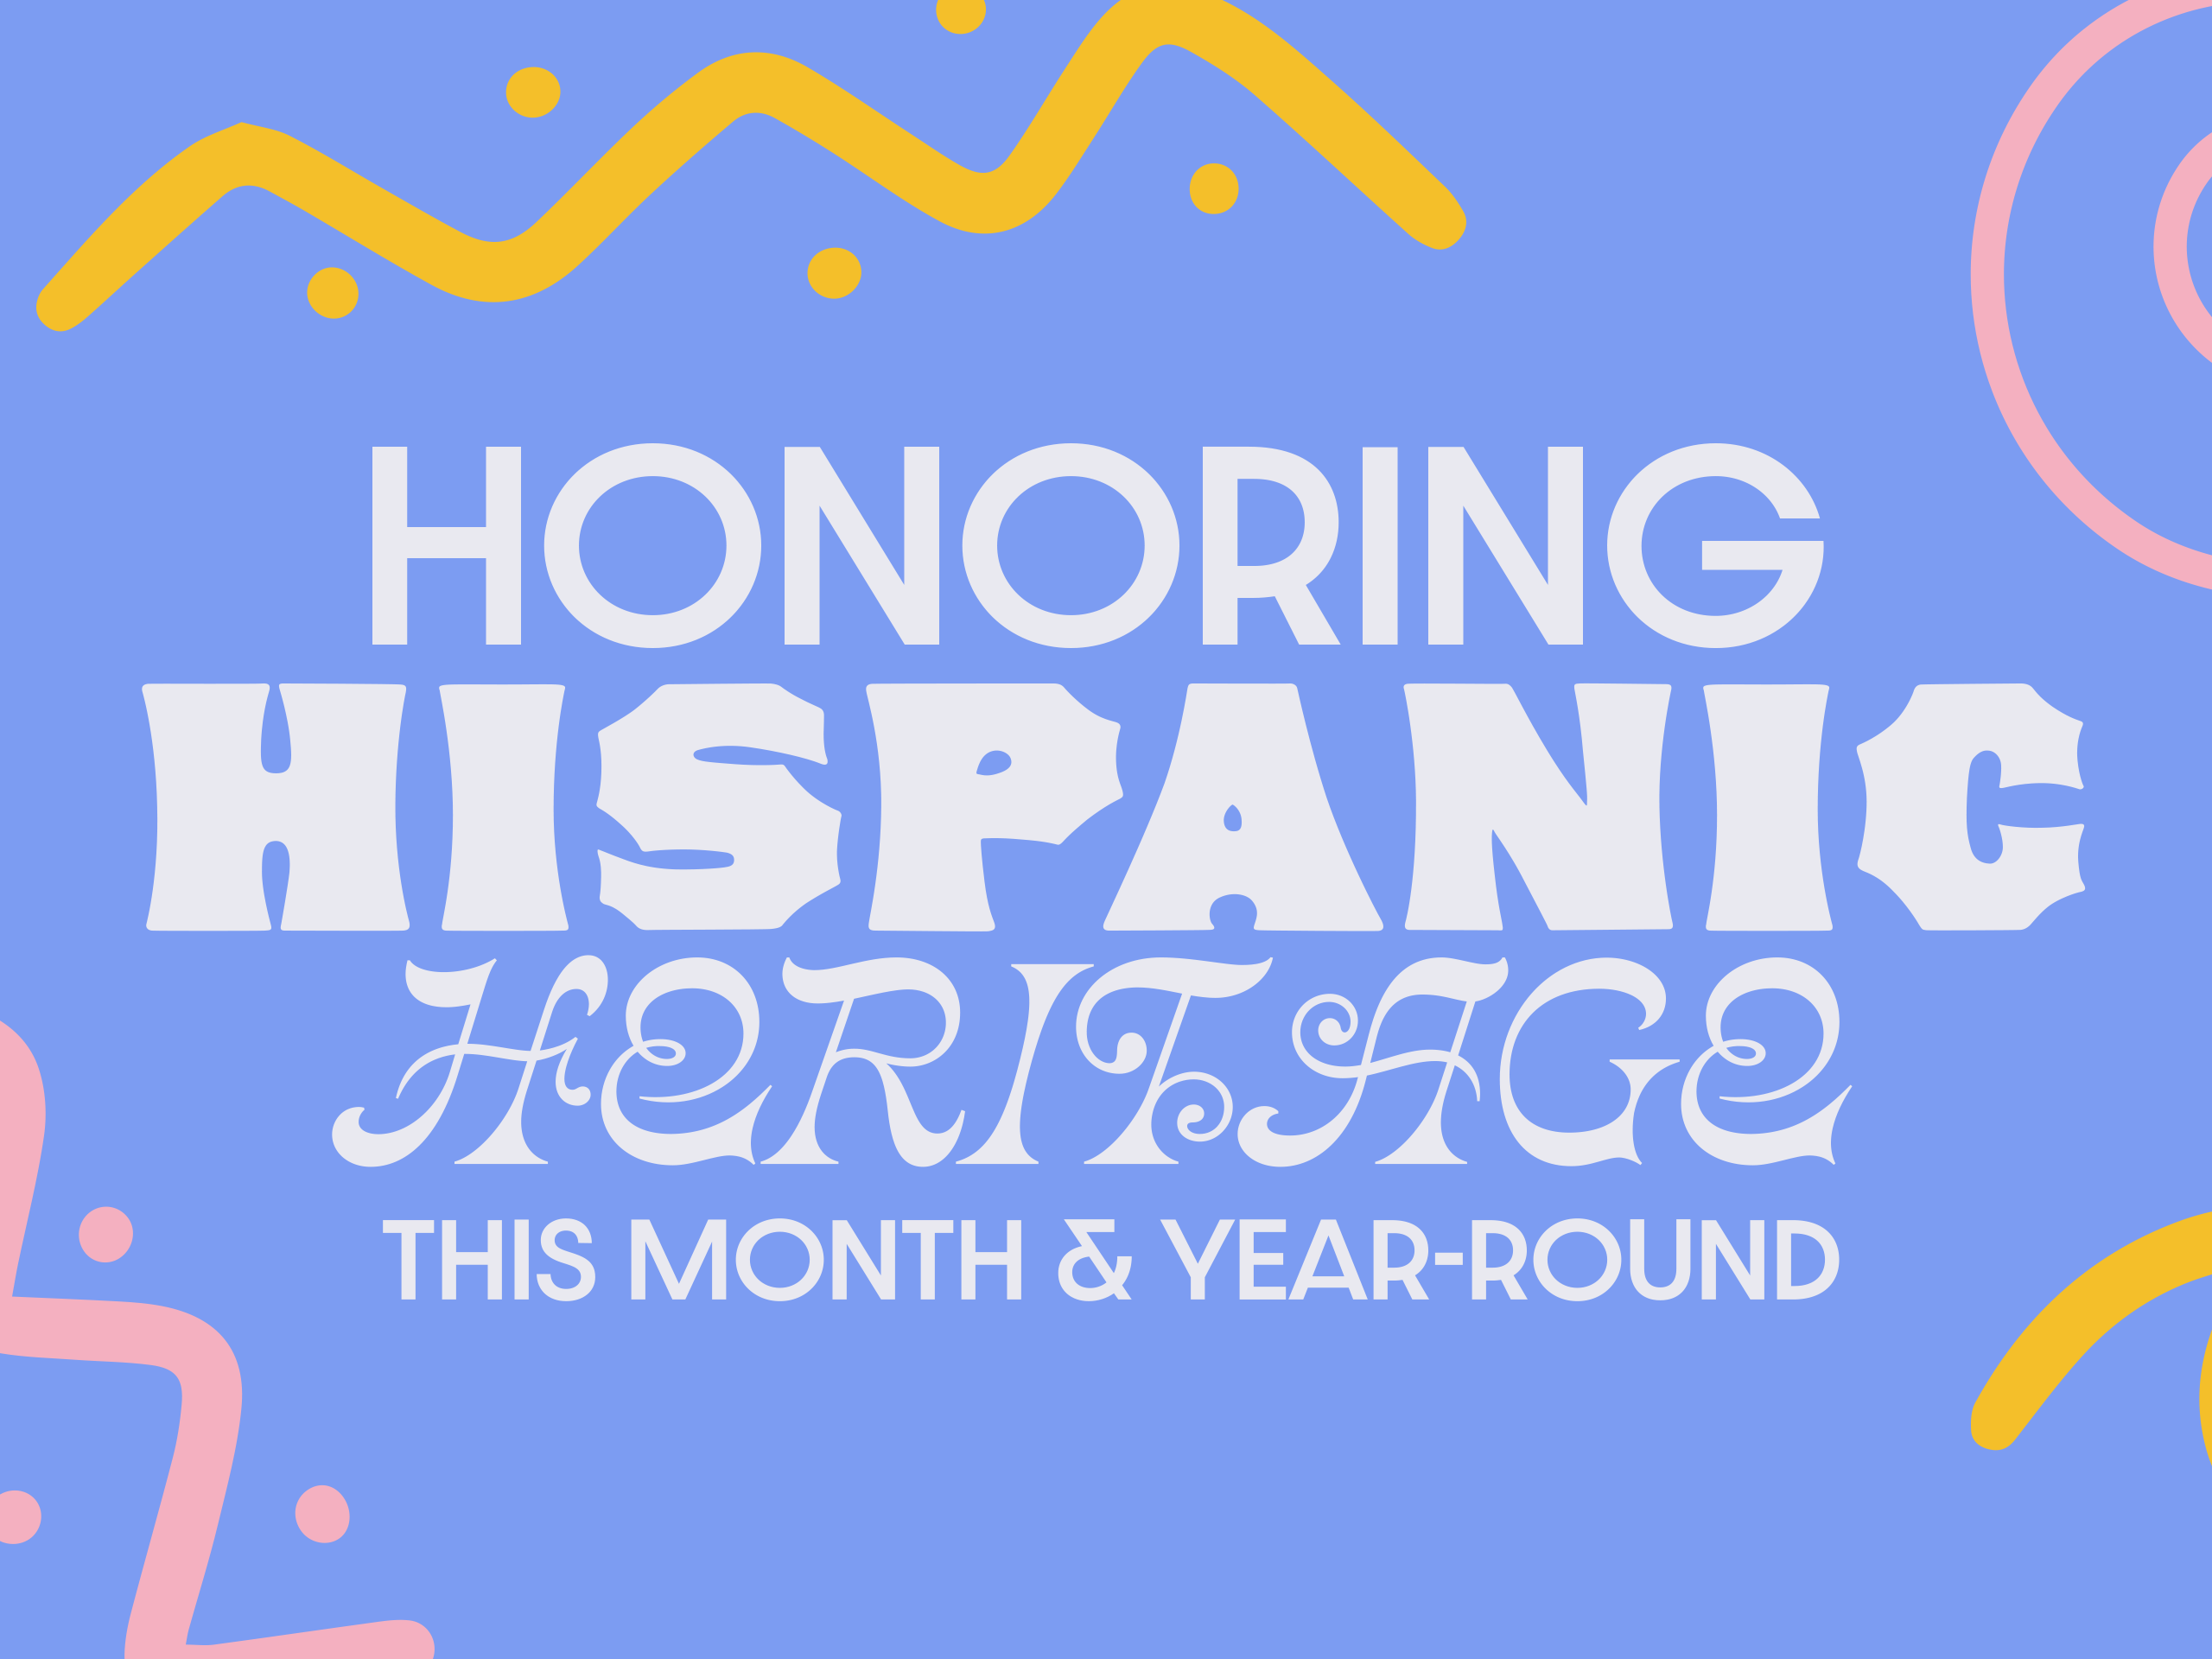 Celebrating Hispanic Heritage Month Year-Round